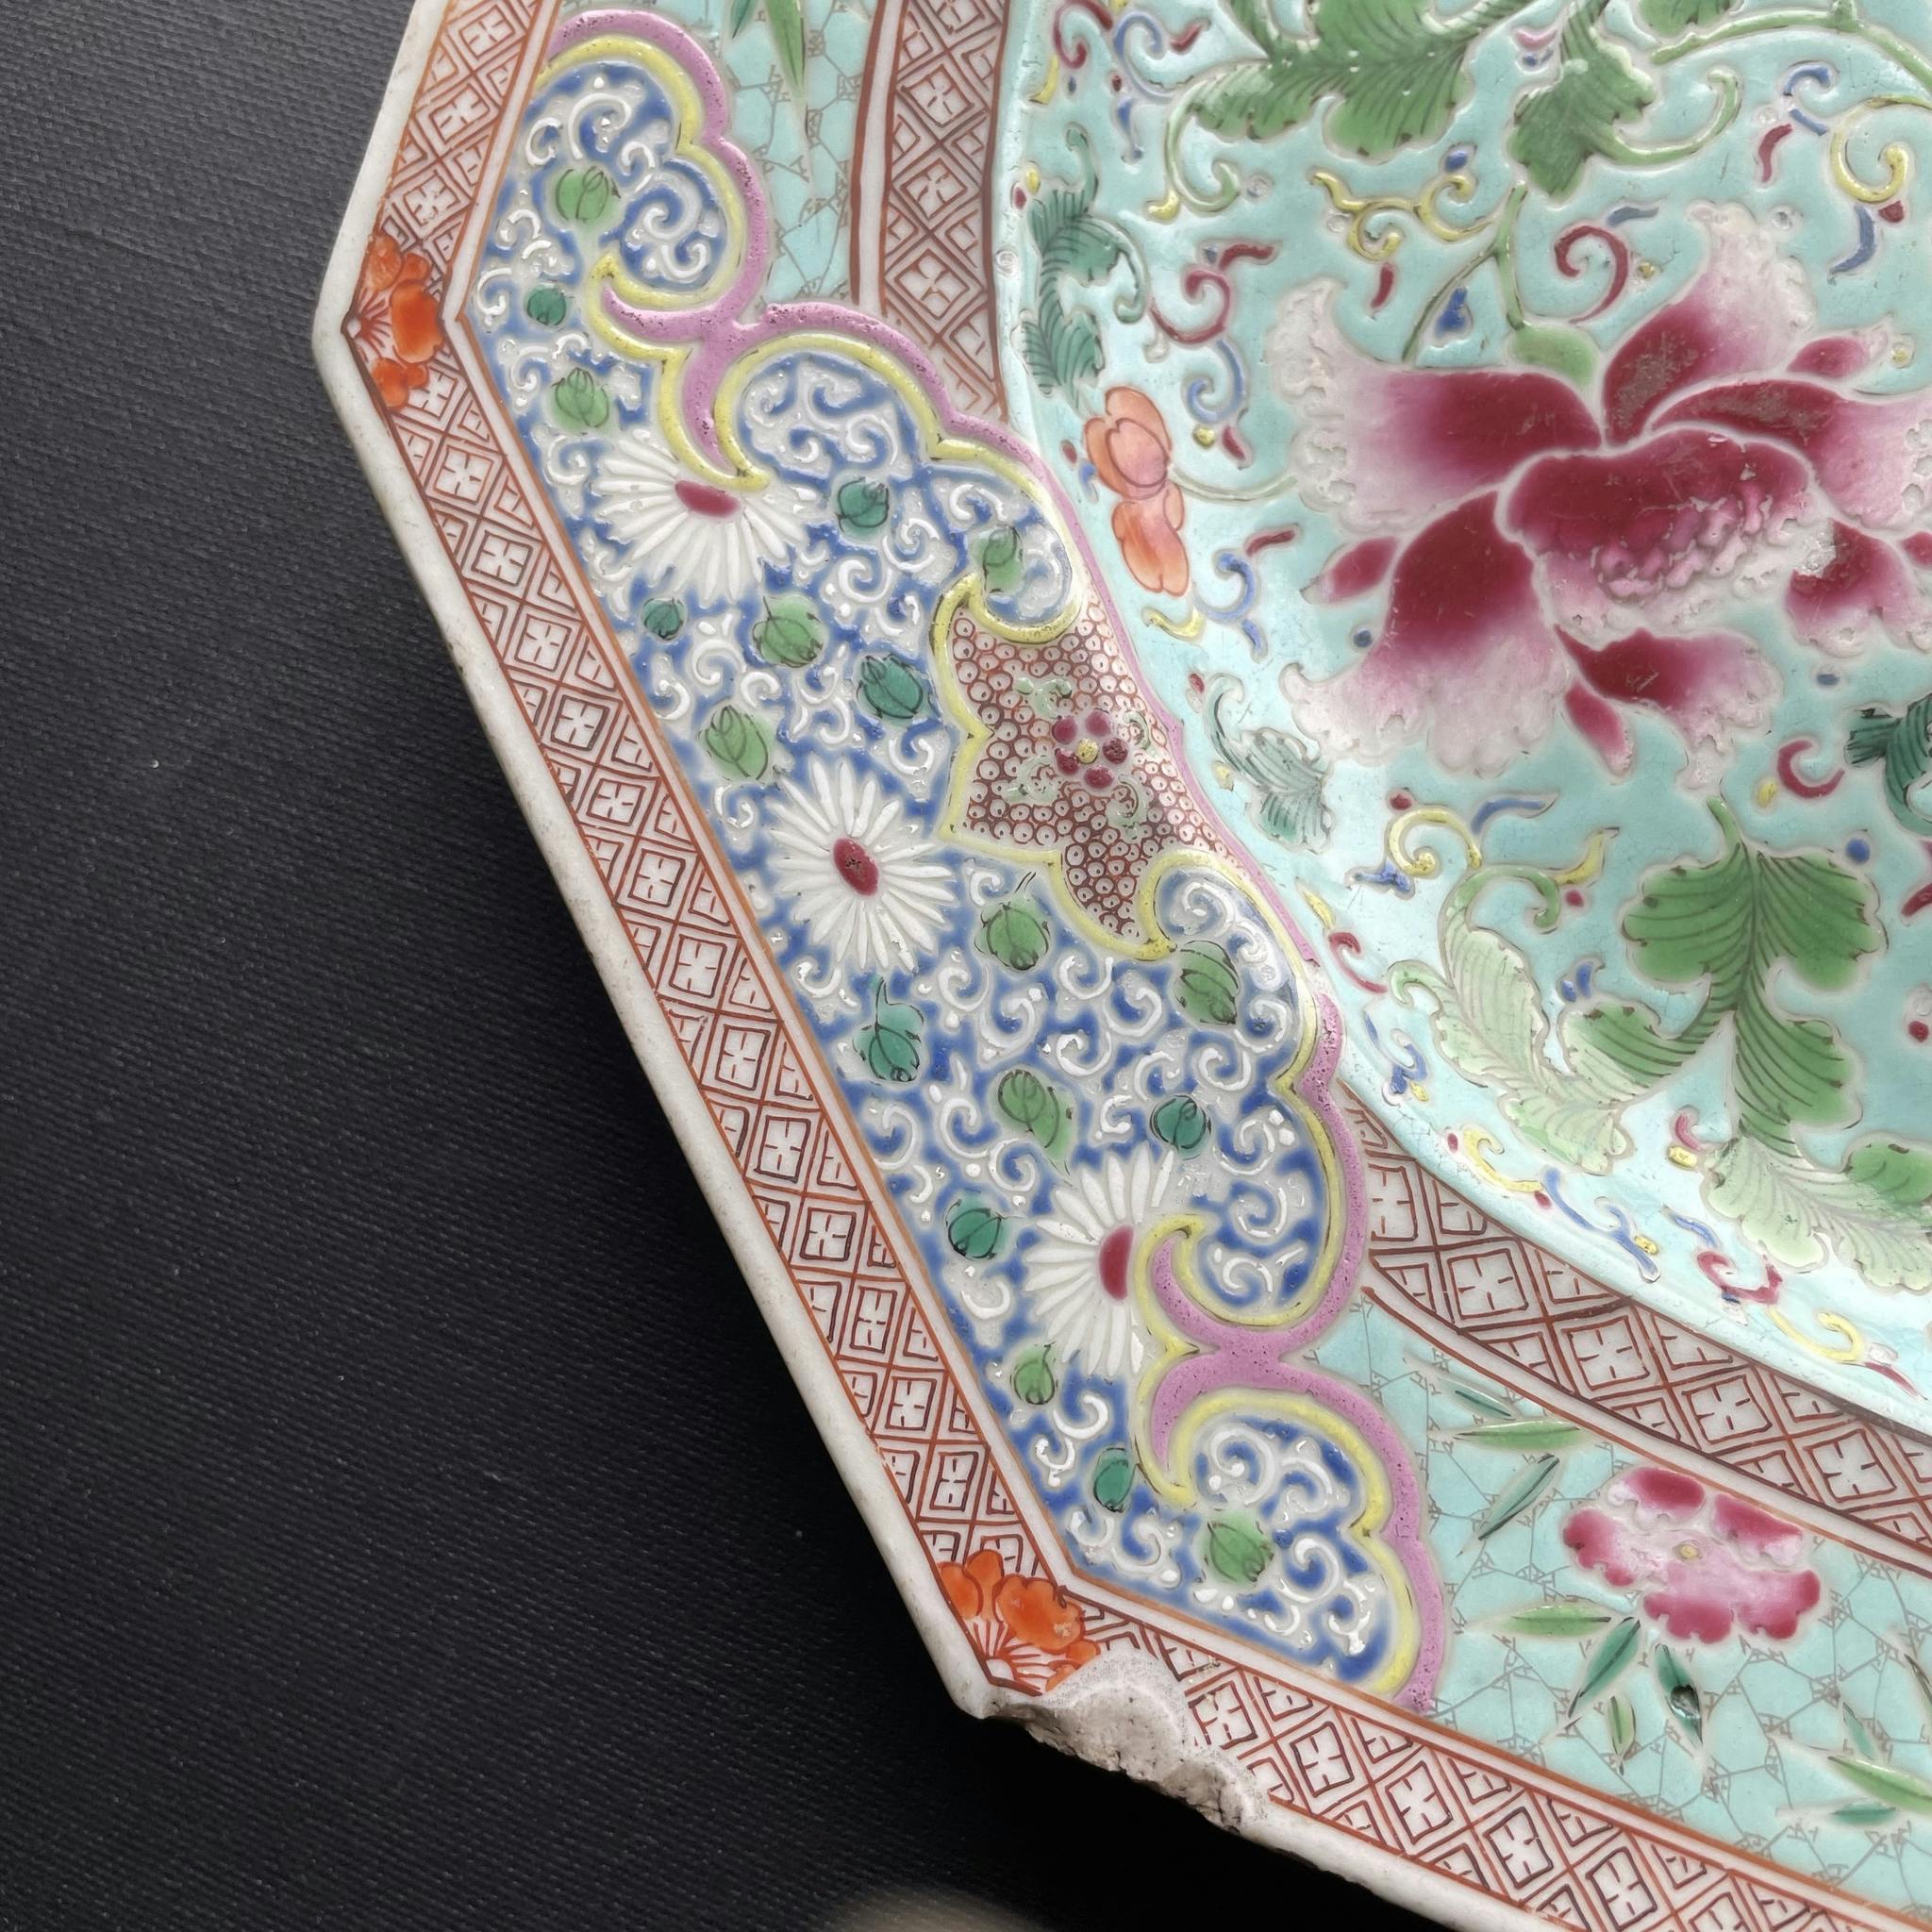 Antique Chinese famille rose platter, 18th c, Islamic / Peranakan export #1396